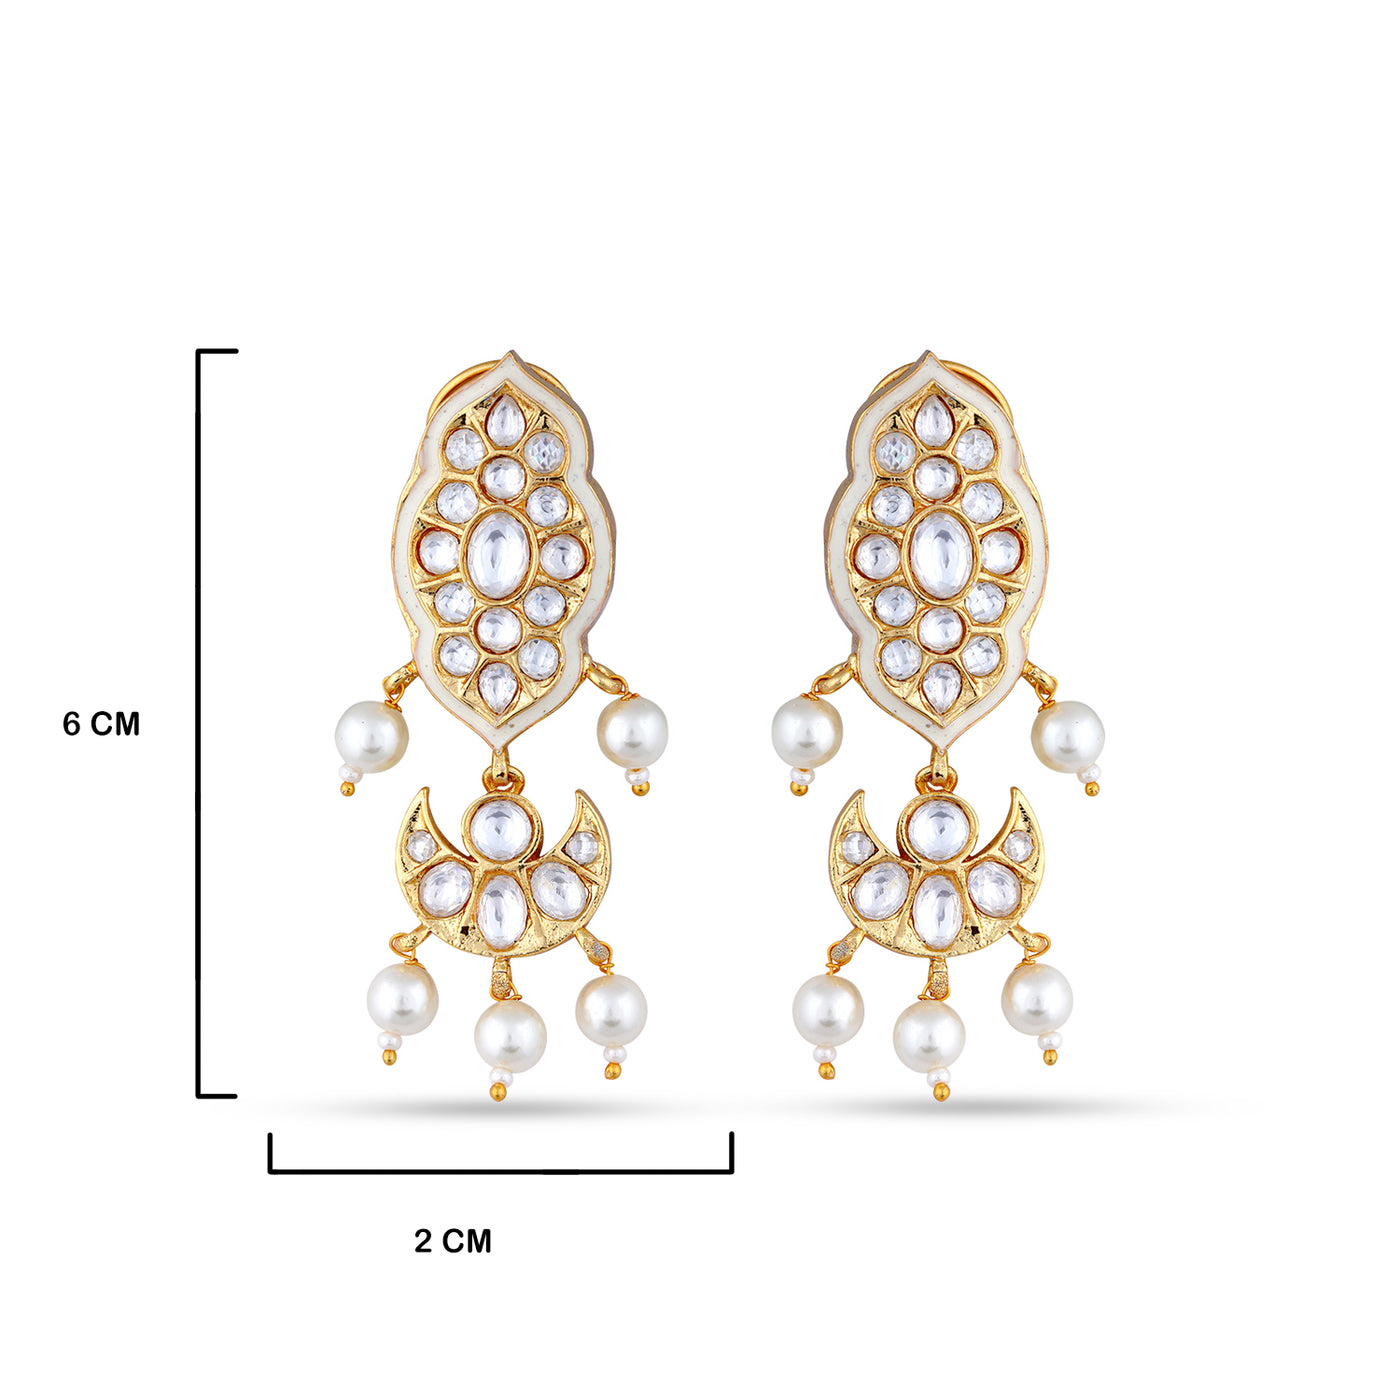  Kundan Pearl Earrings with measurements in cm. 6cm by 2cm.